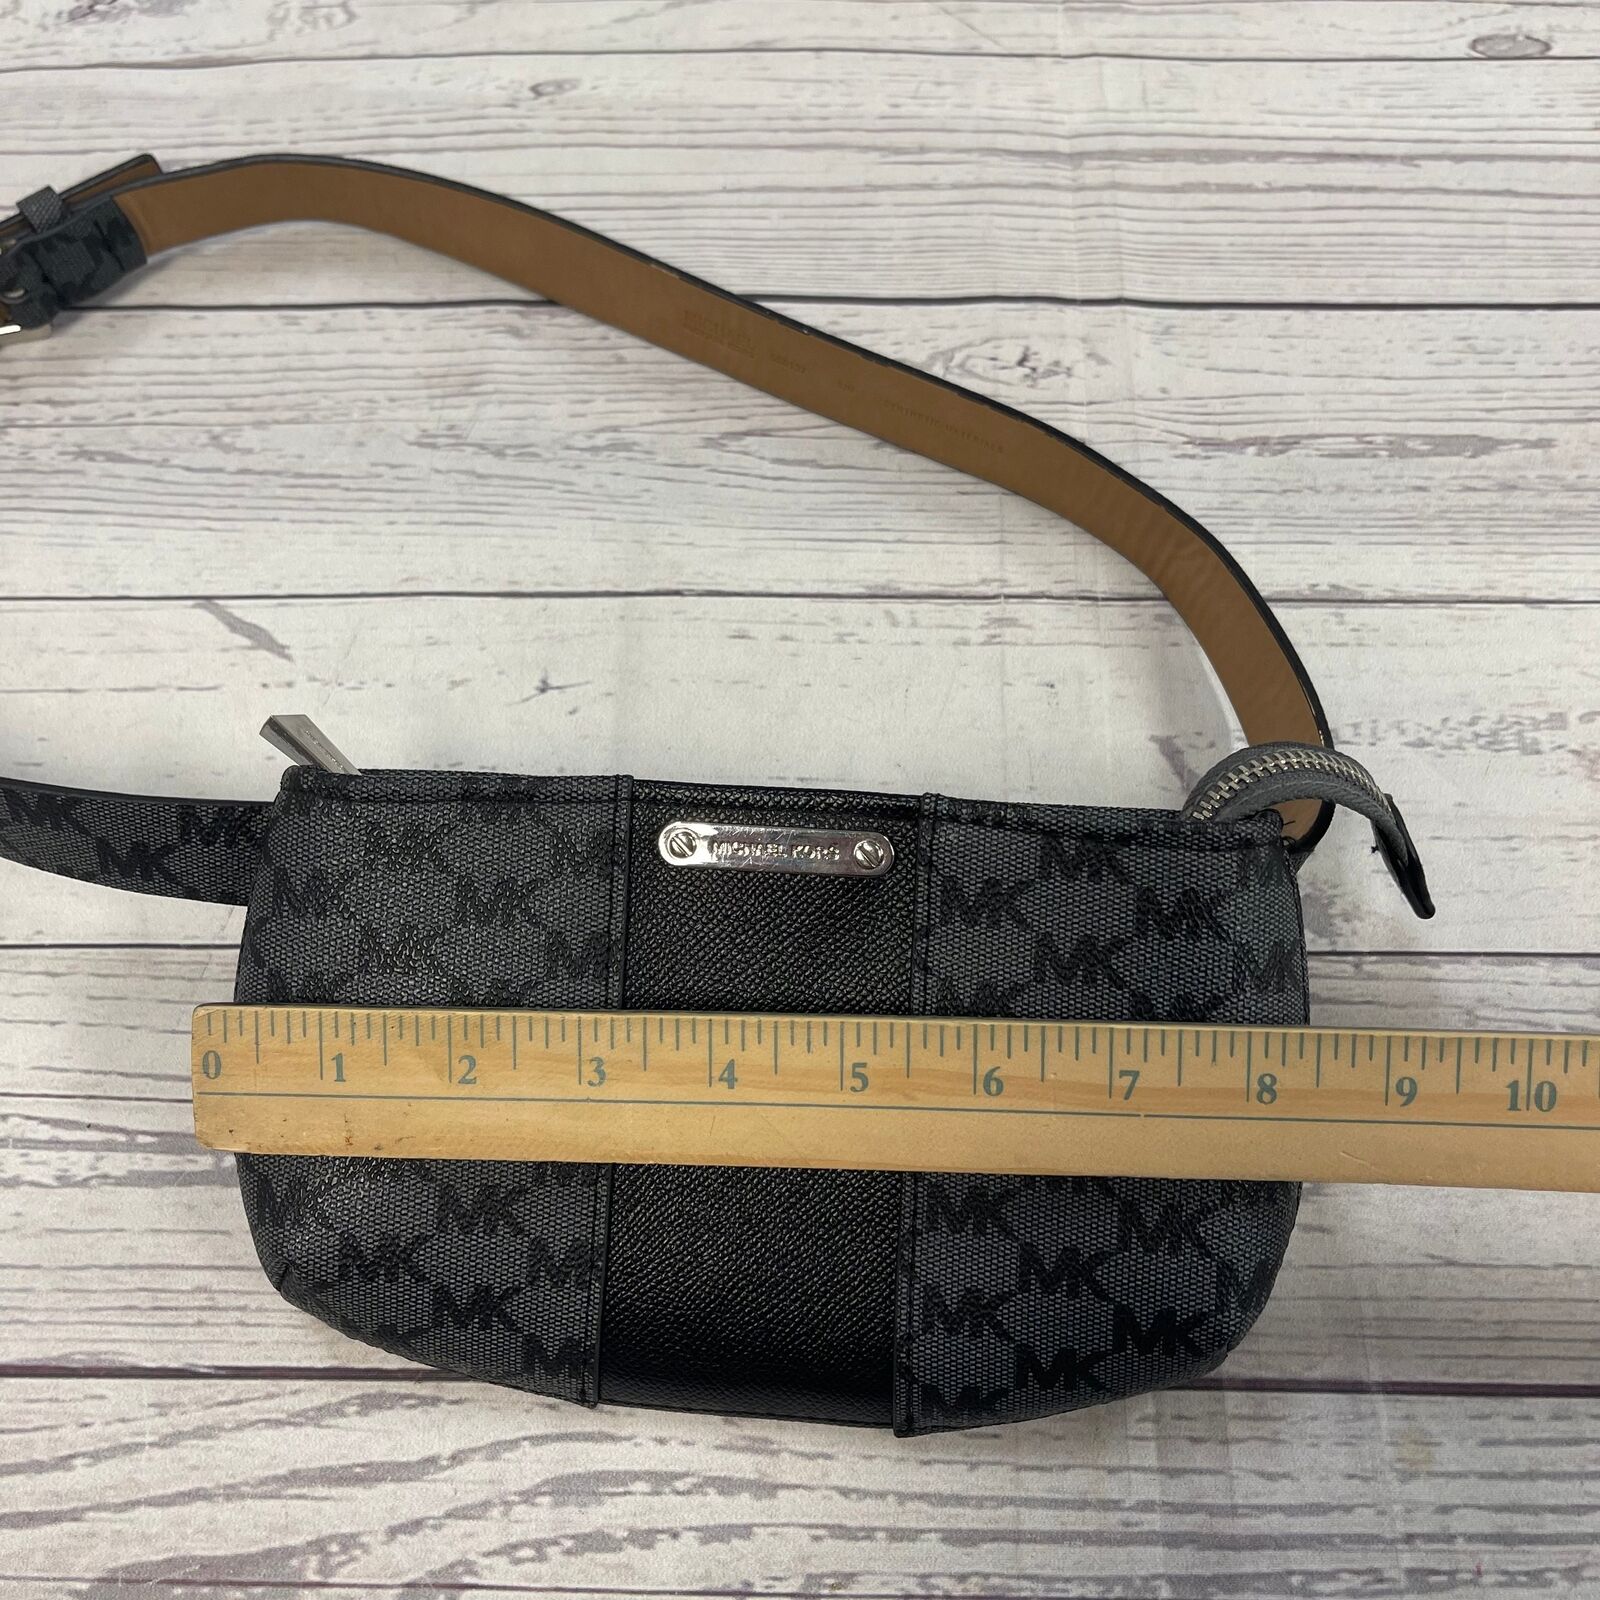 Michael Kors Black and Grey Leather Monogram Handbag